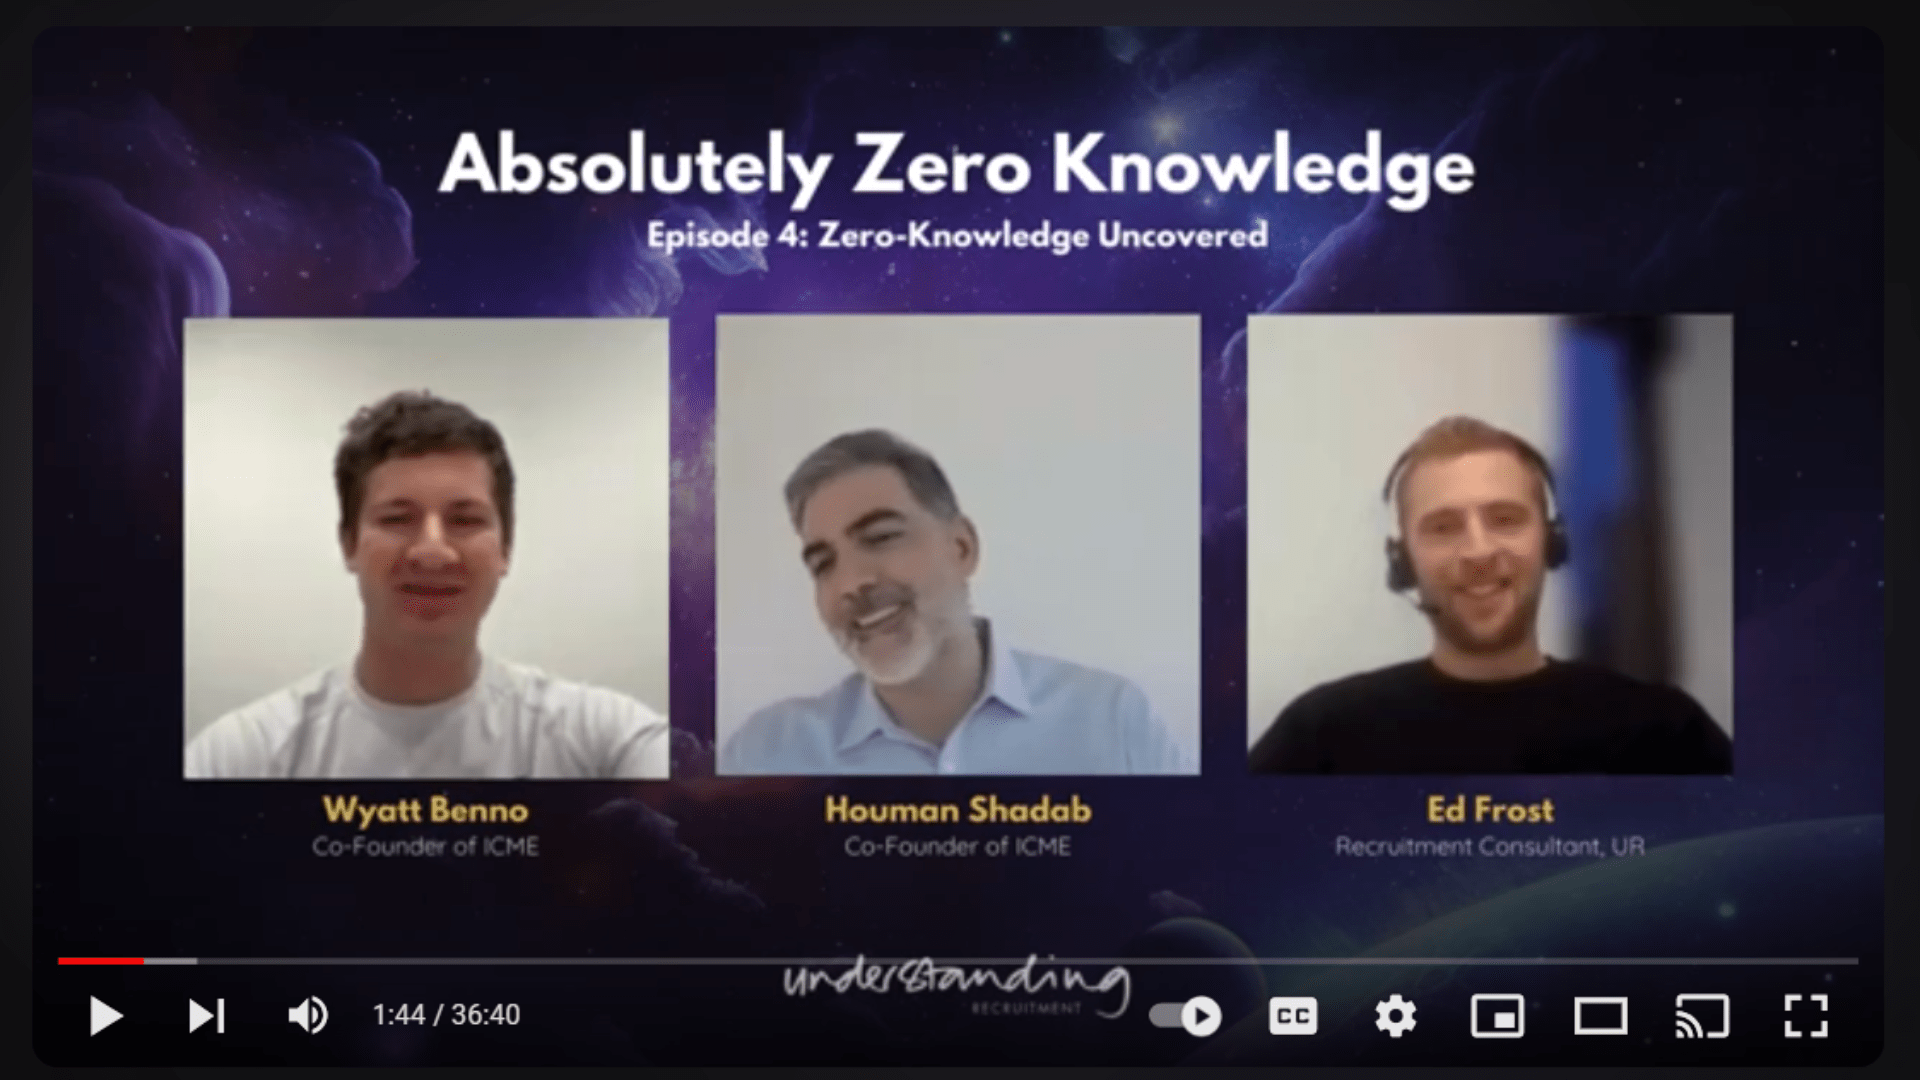 Absolutely Zero Knowledge Episode 4: Houman Shadab & Wyatt Benno